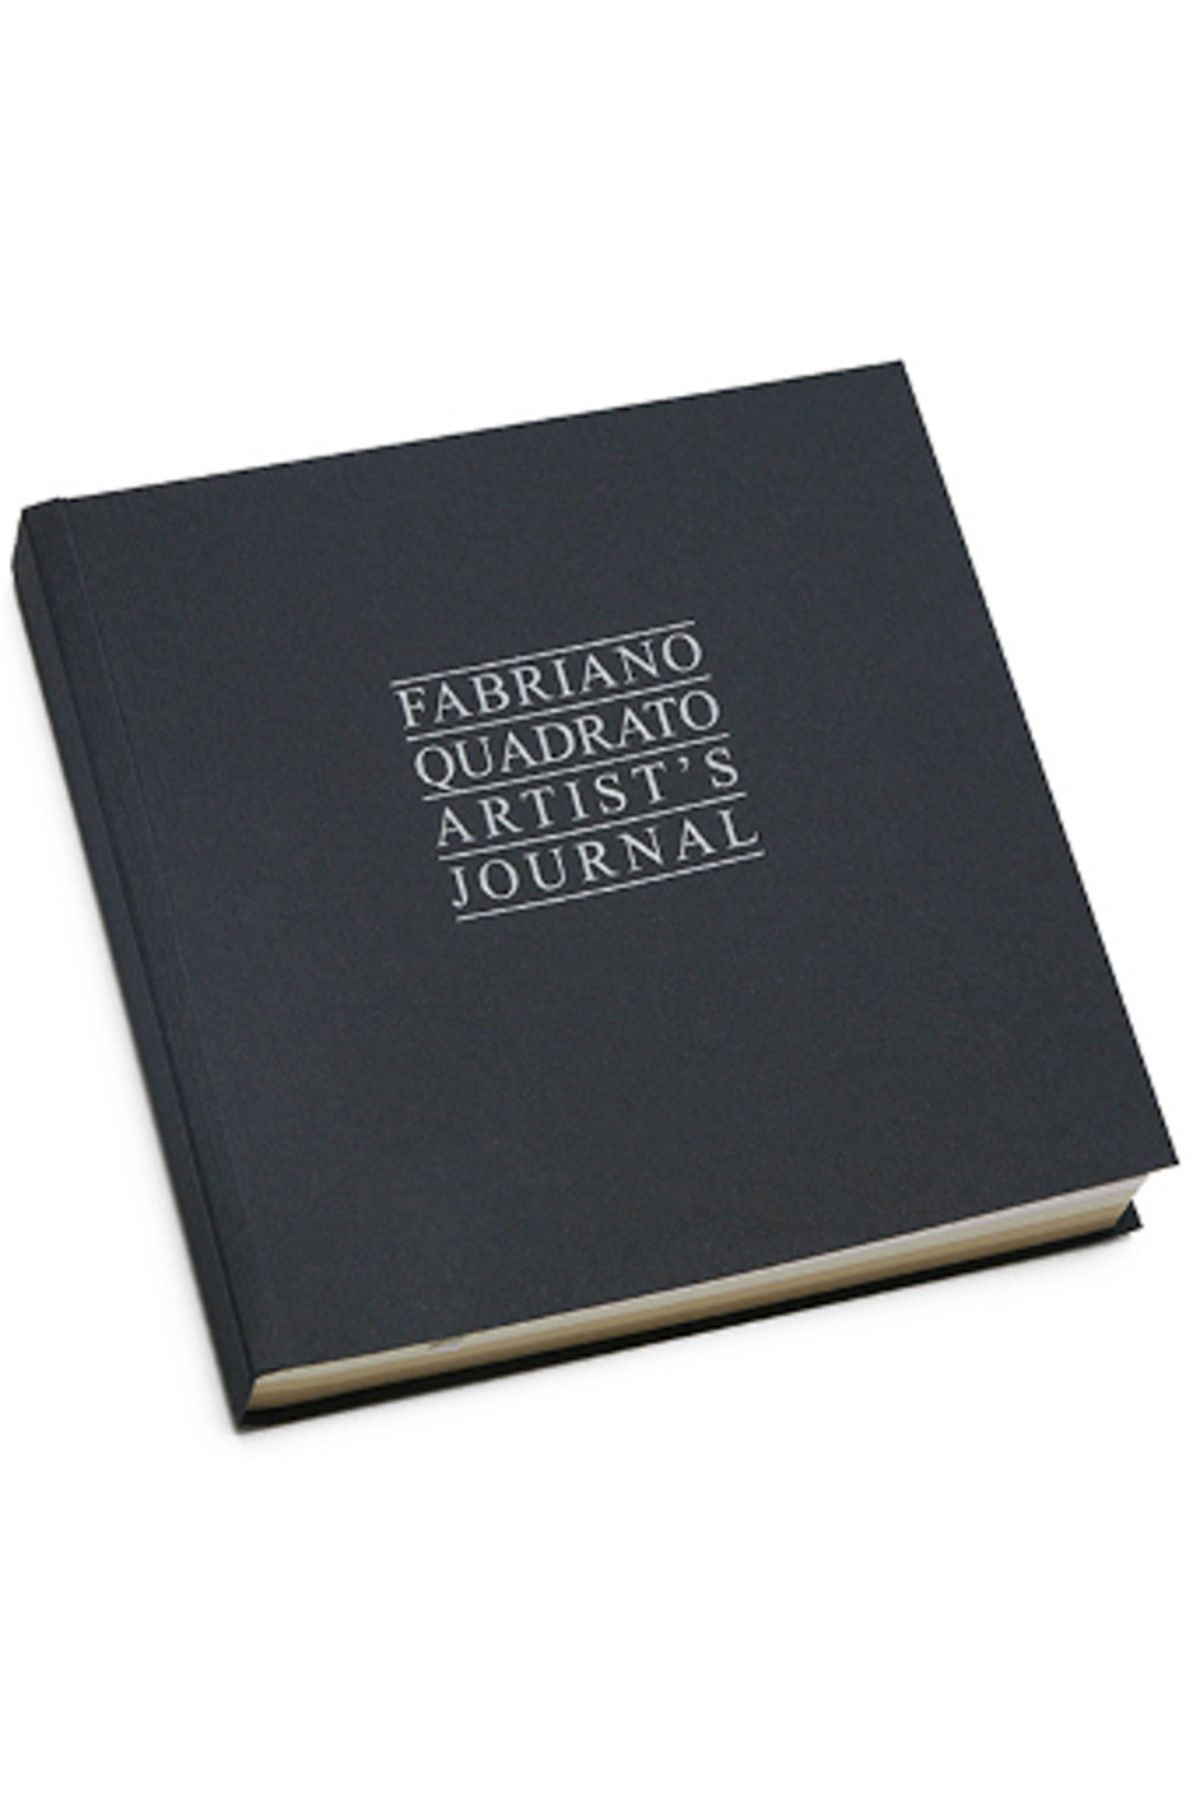 Fabriano Quadrato Artist's Journal, Siyah Kapaklı, 90gr - 23x23cm 5695898